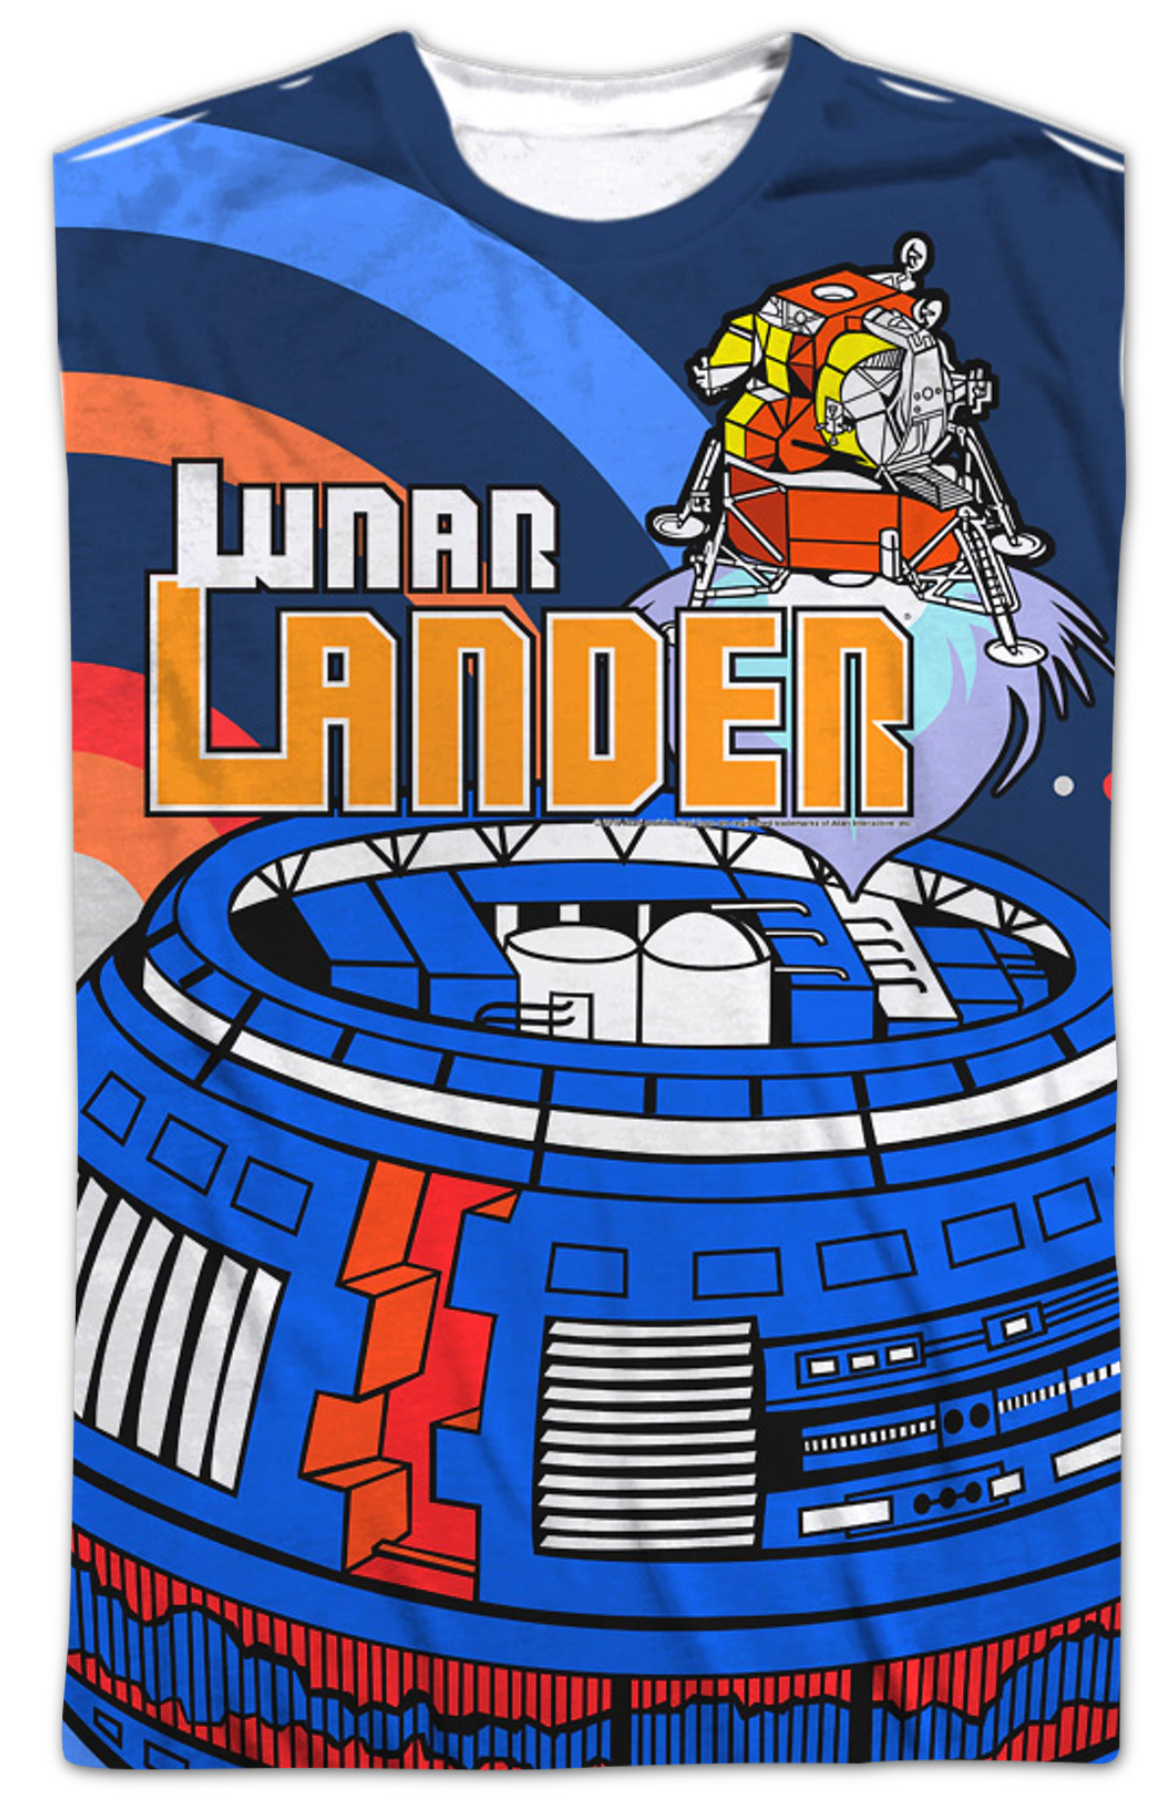 Lunar Lander Atari T-Shirt